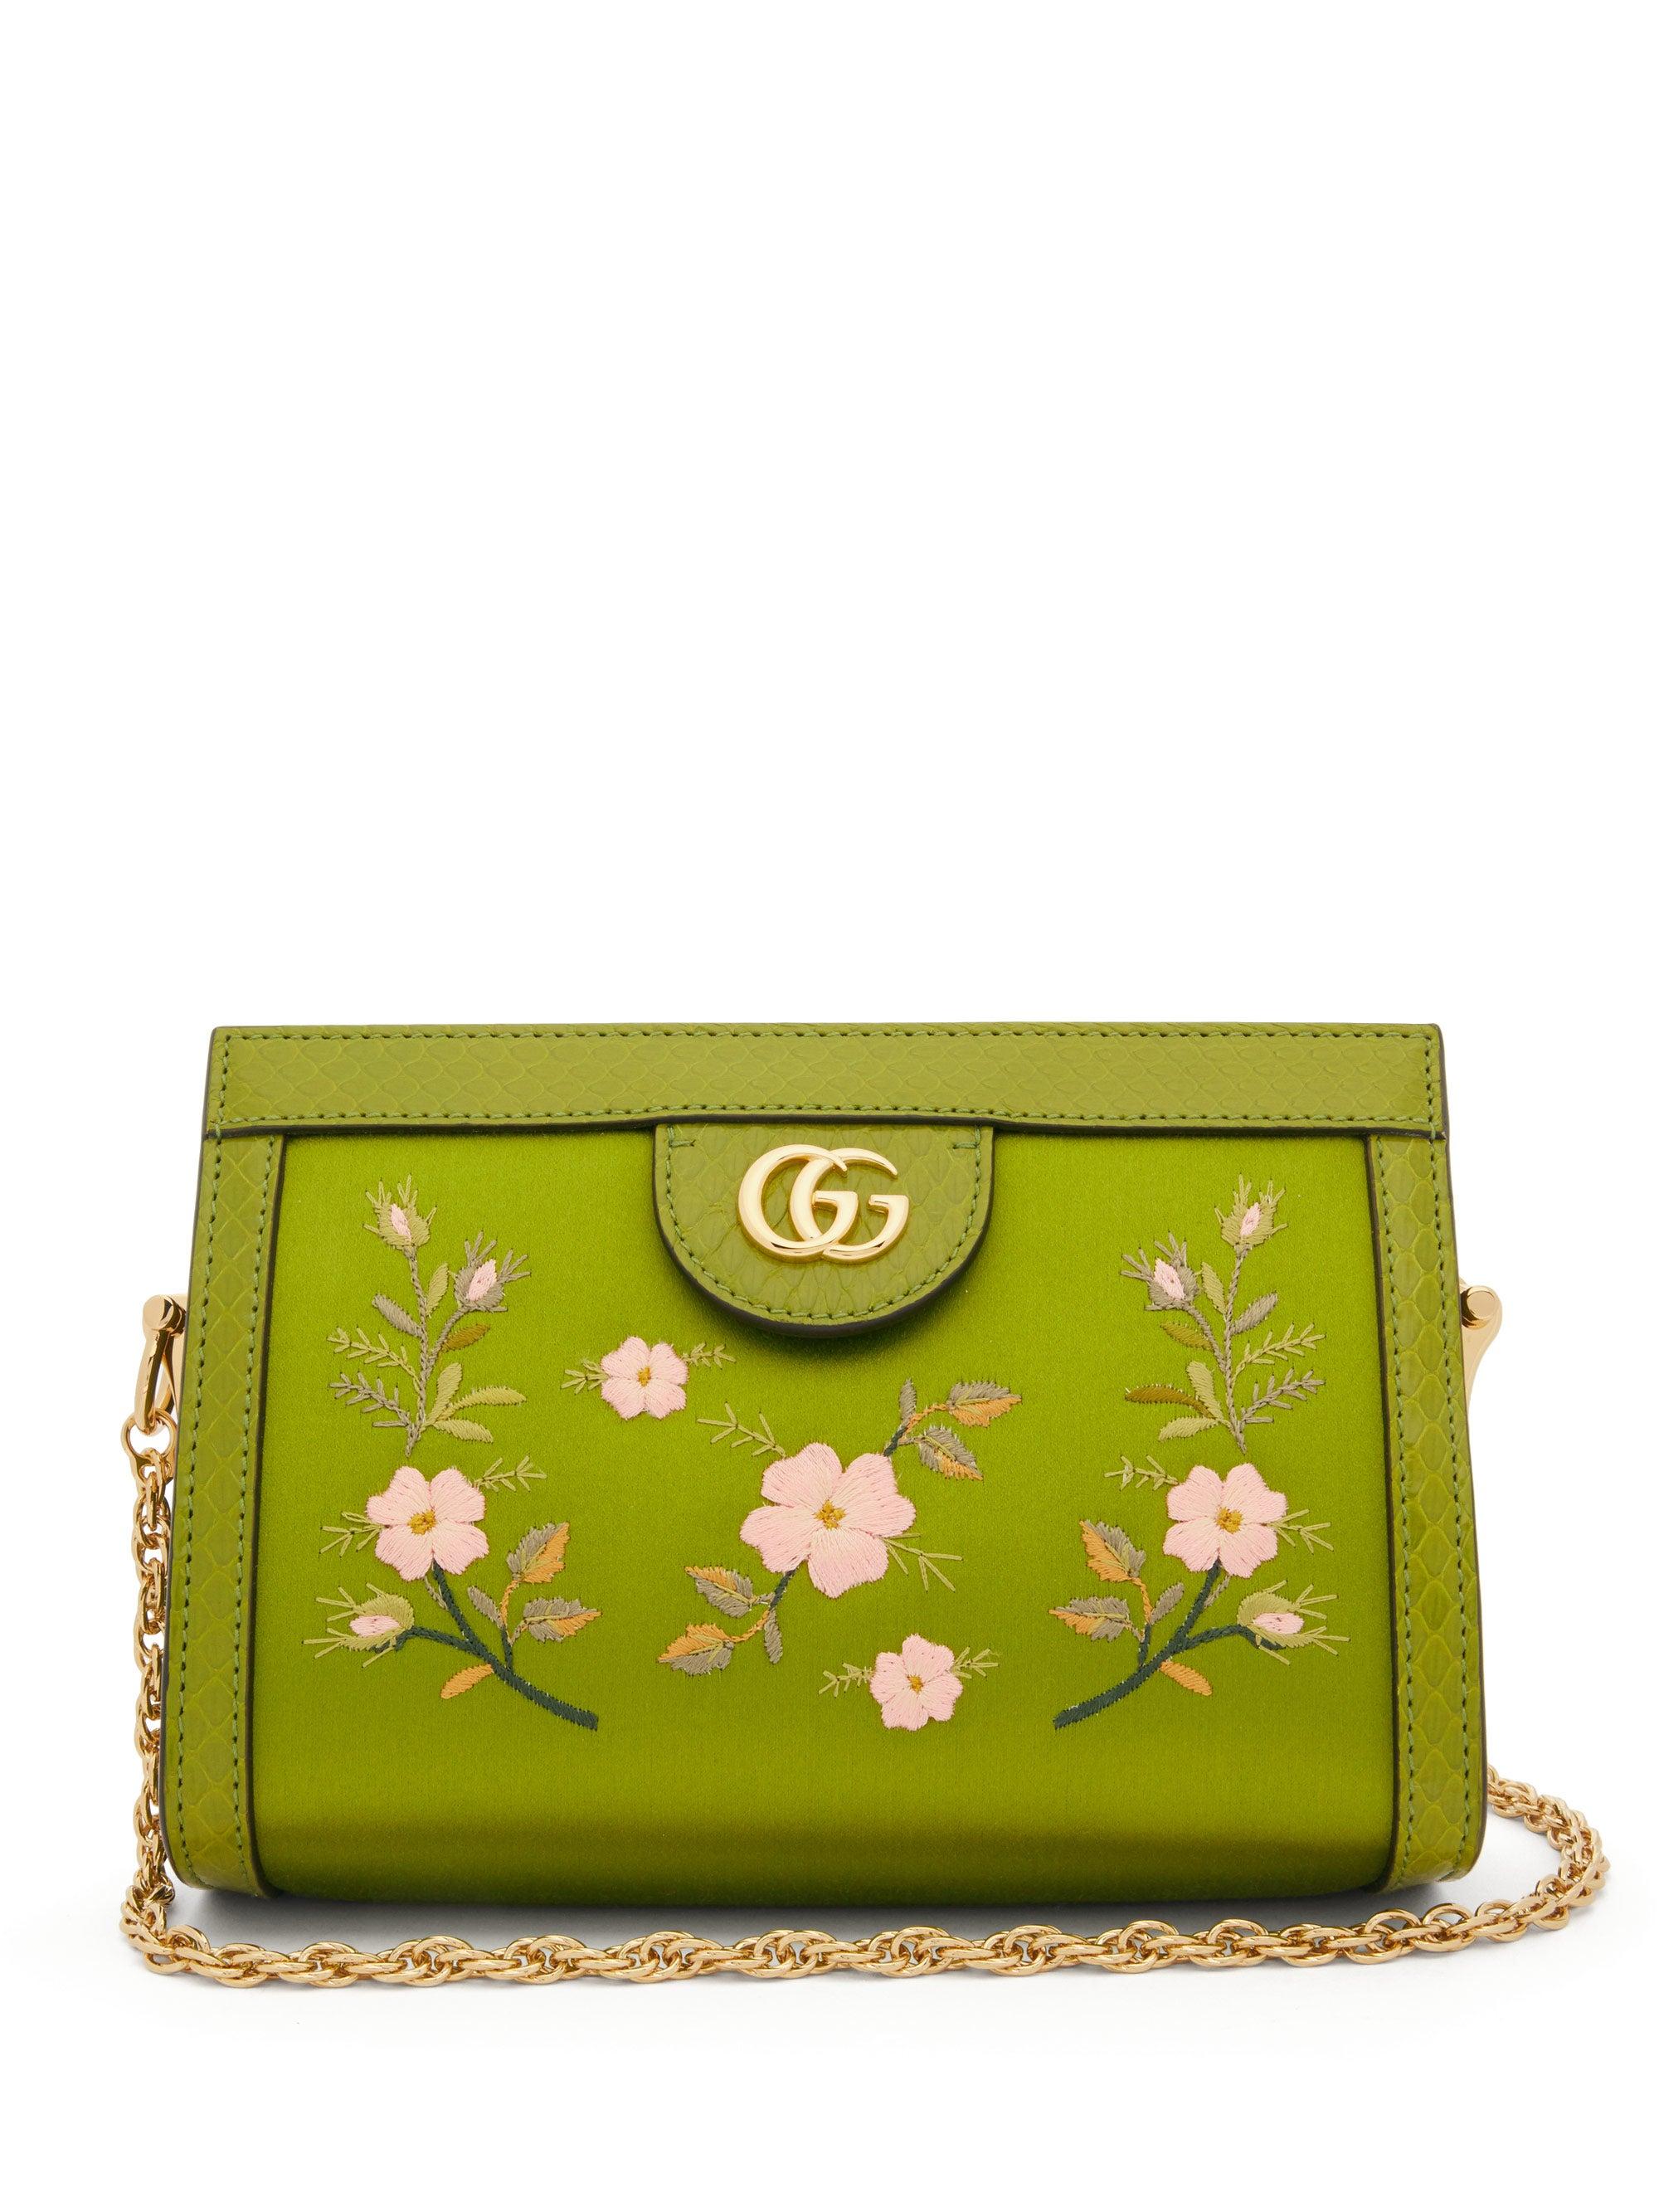 Gucci Ophidia Floral-print Shoulder Bag in Green | Lyst